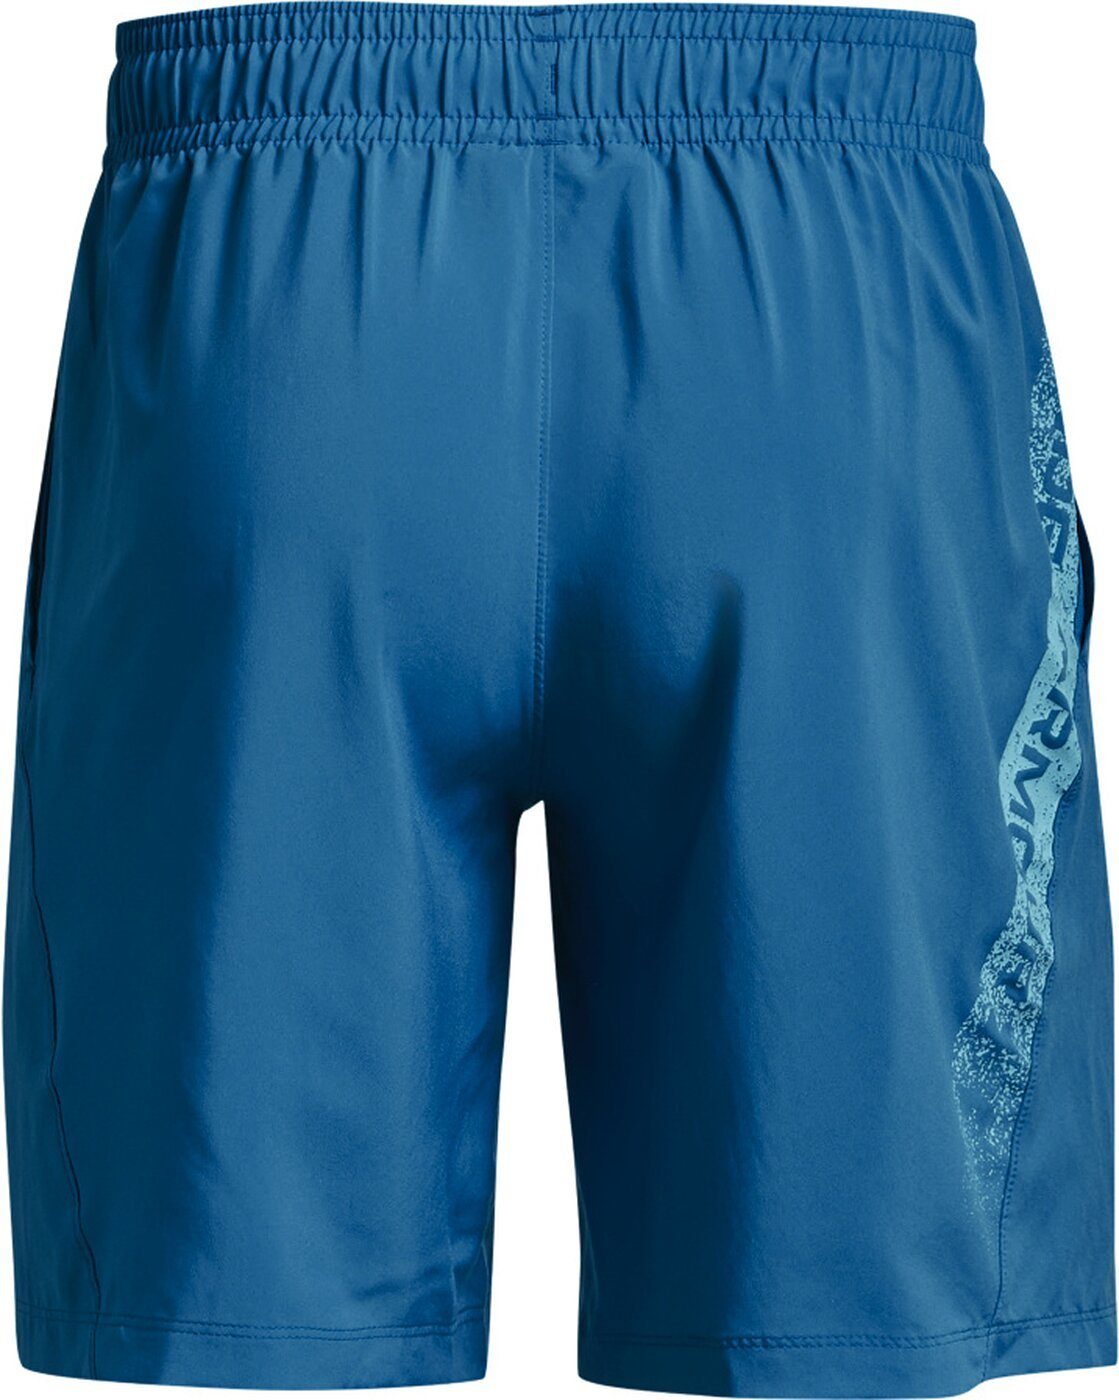 BLUE WOVEN UA Under 899 GRAPHIC CRUISE Armour® SHORTS 899 Shorts